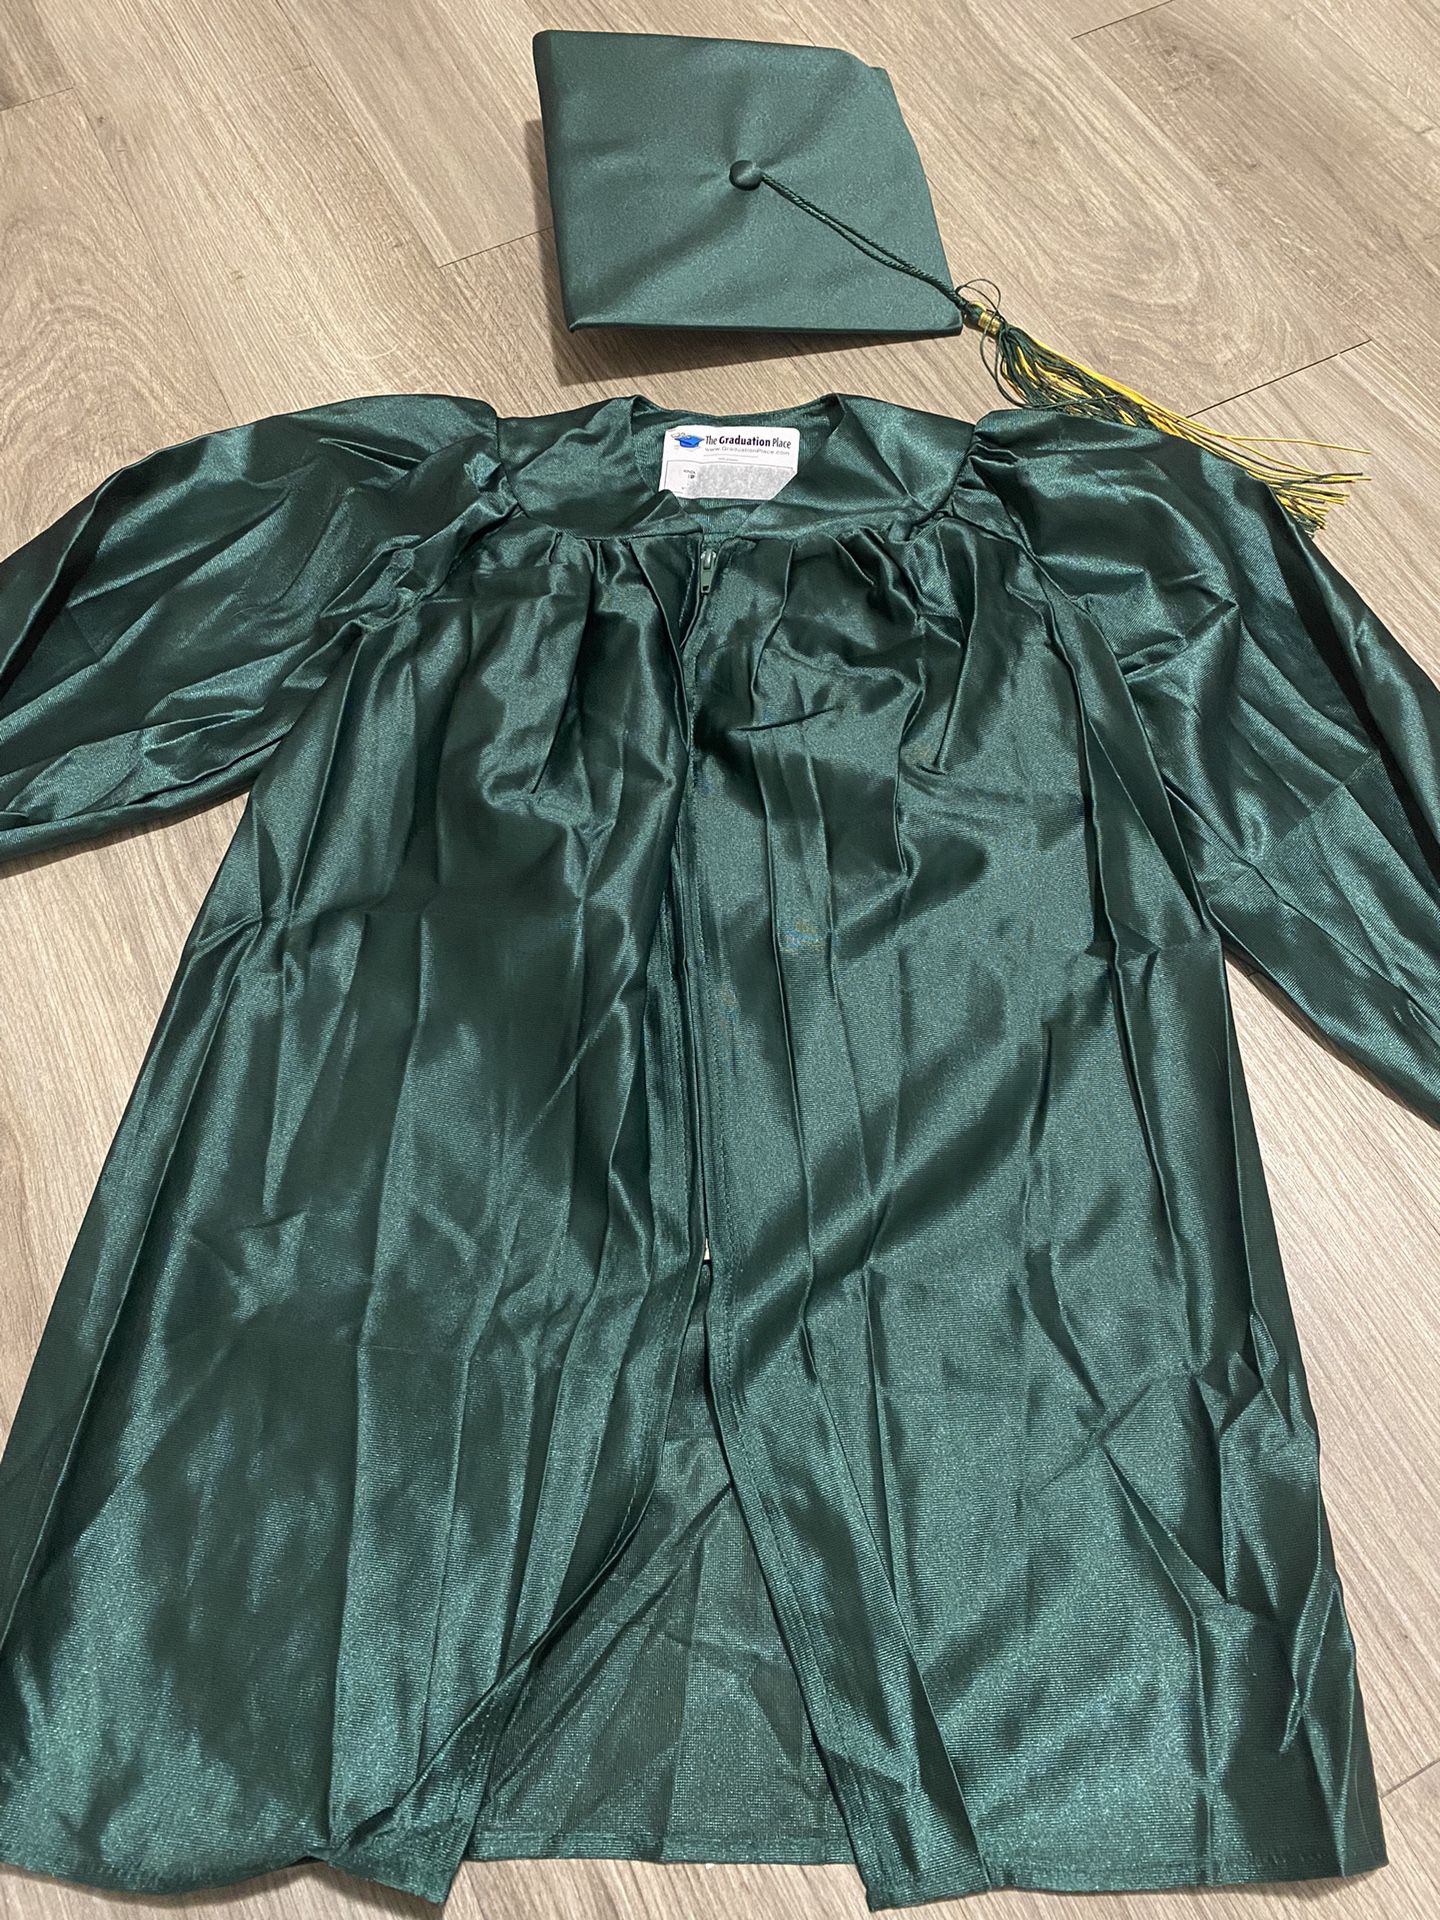 Green Kid Size Graduation Gown